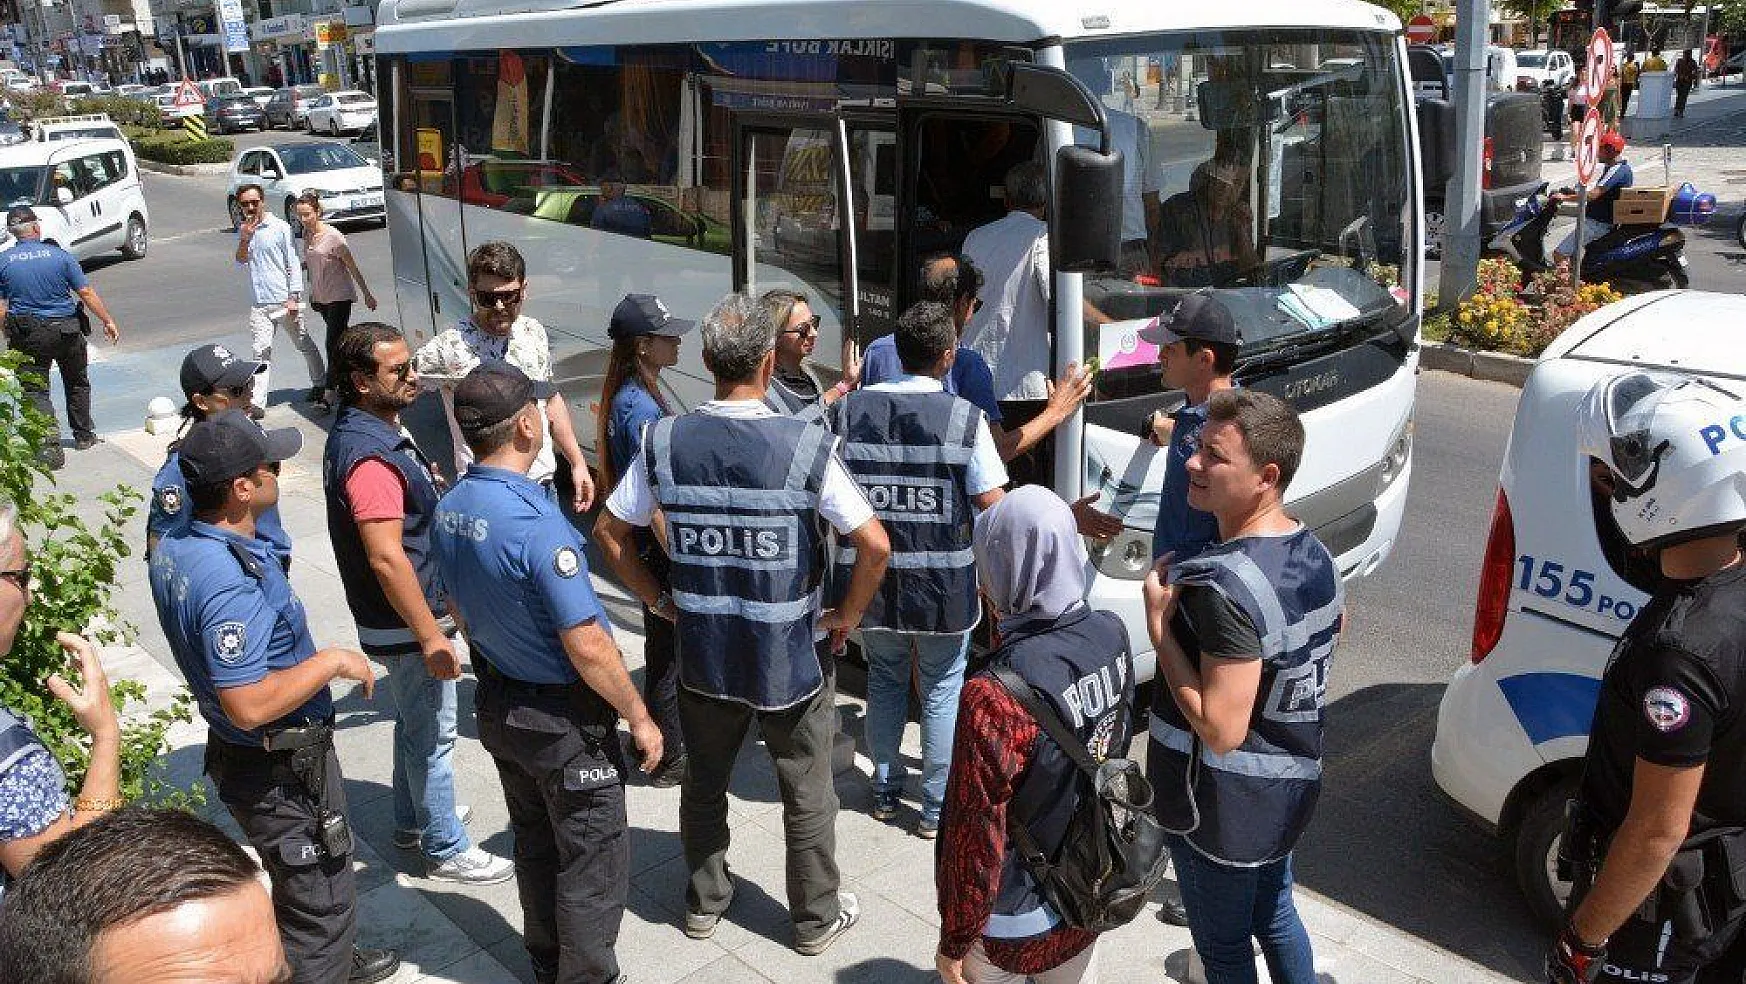 HDP'liler gözaltına alındı